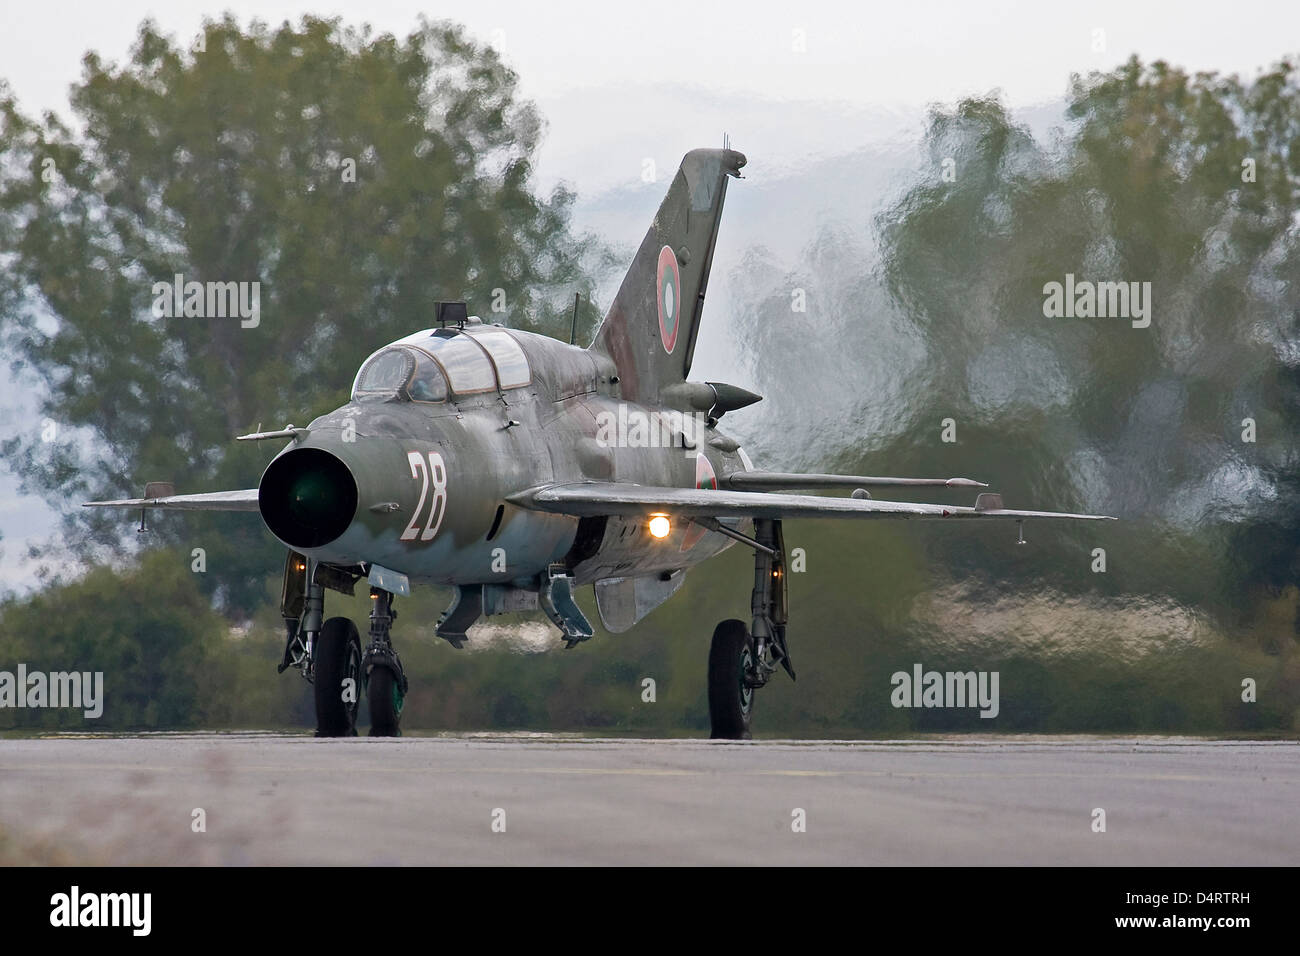 A Bulgarian Air Force MiG-21UM aircraft taxiing after a training sortie at Graf Ignatievo Air Base, Bulgaria. Stock Photo